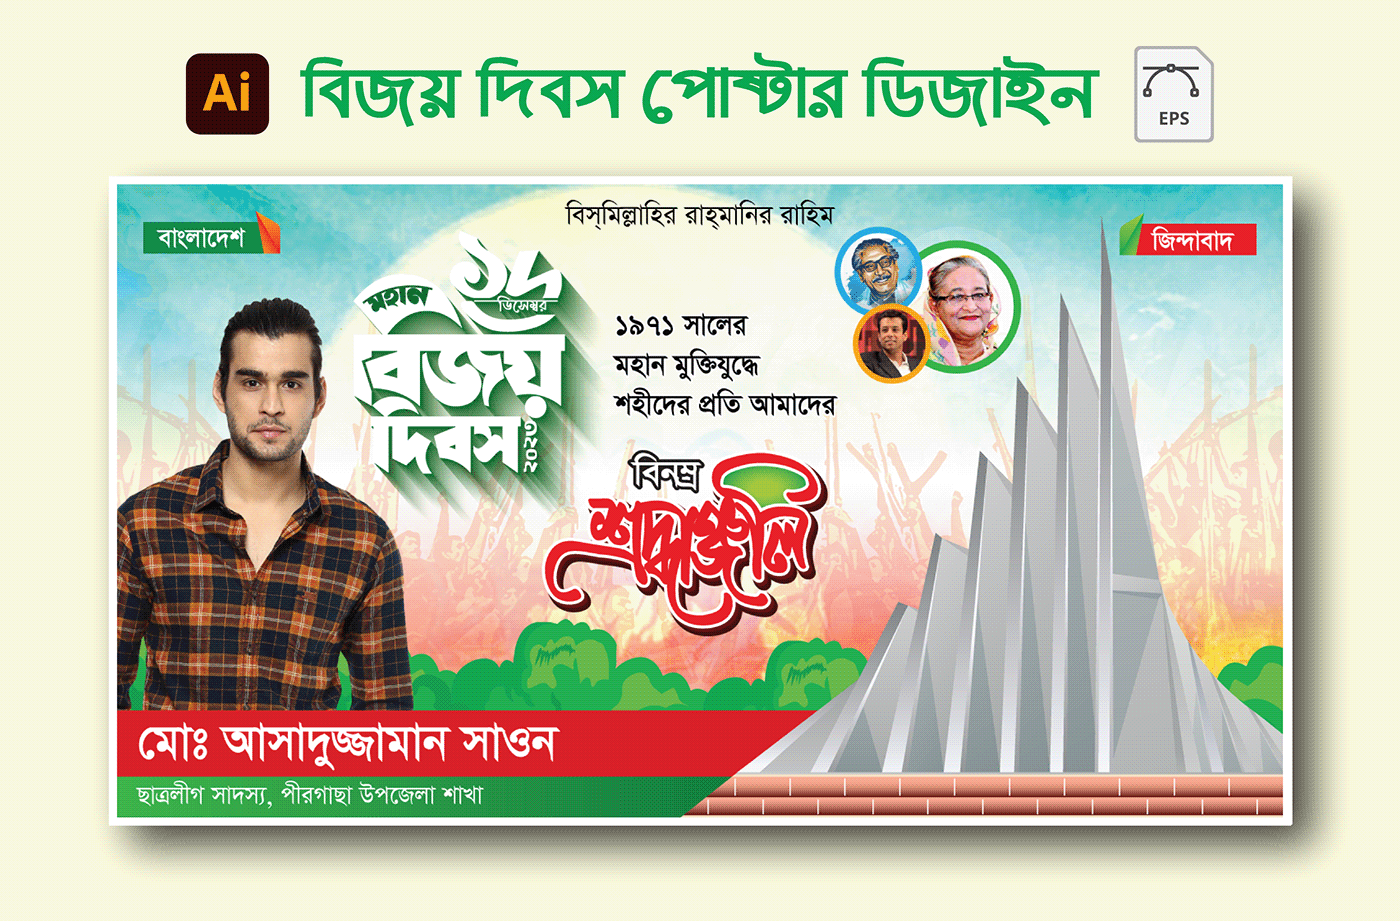 victoryday December16 Independenceday freedomday nationalday 1971war BangladeshVictory liberationwar বিজয়দিবস মুক্তিযুদ্ধ